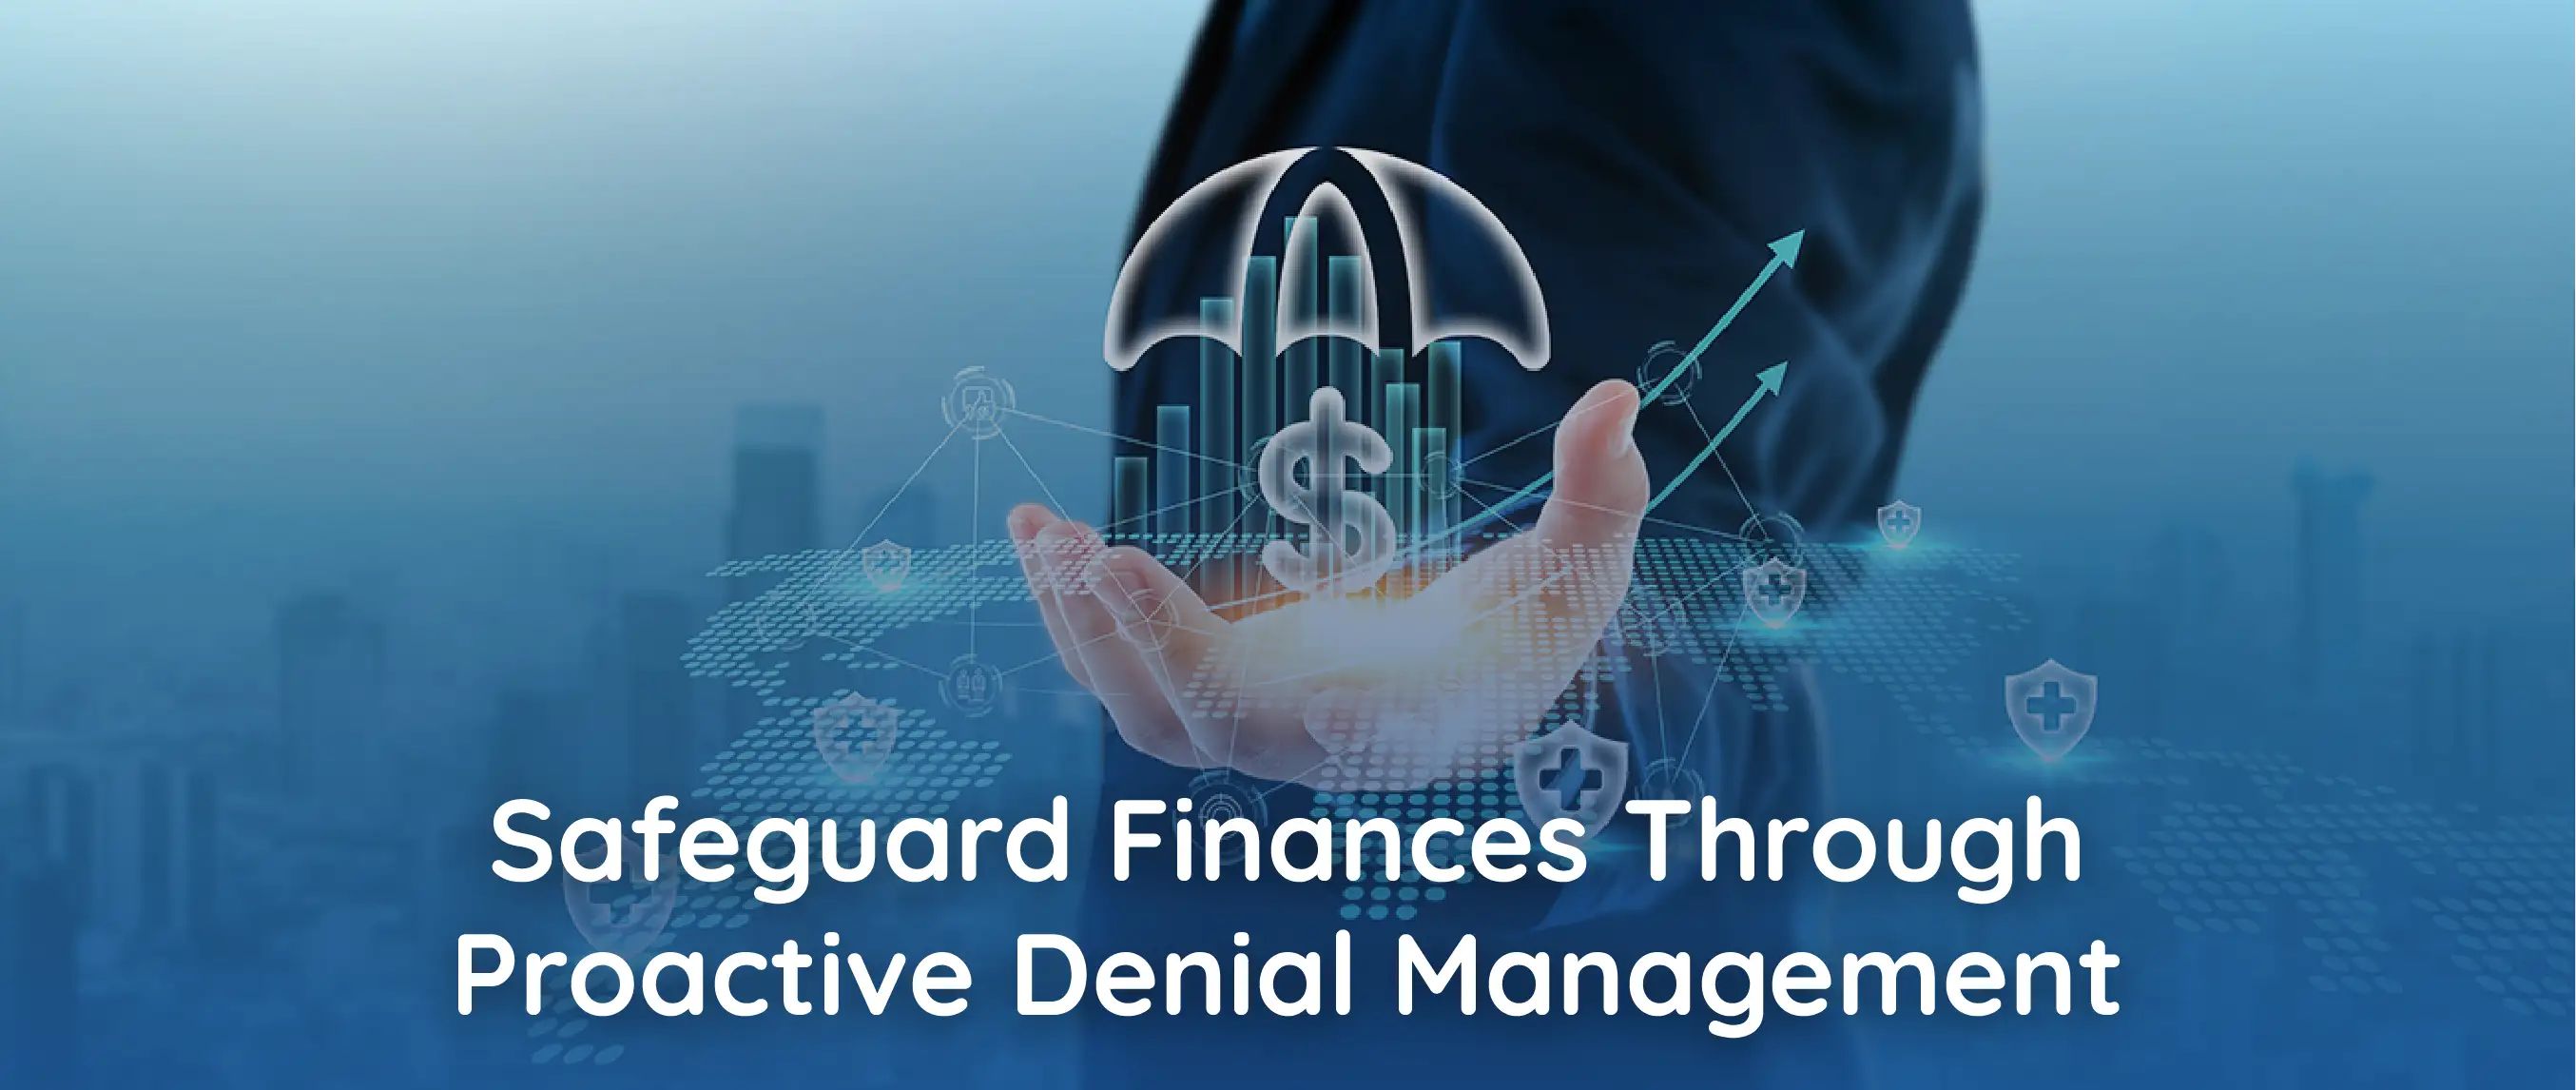 Safeguard Finances Through Proactive Denial Management